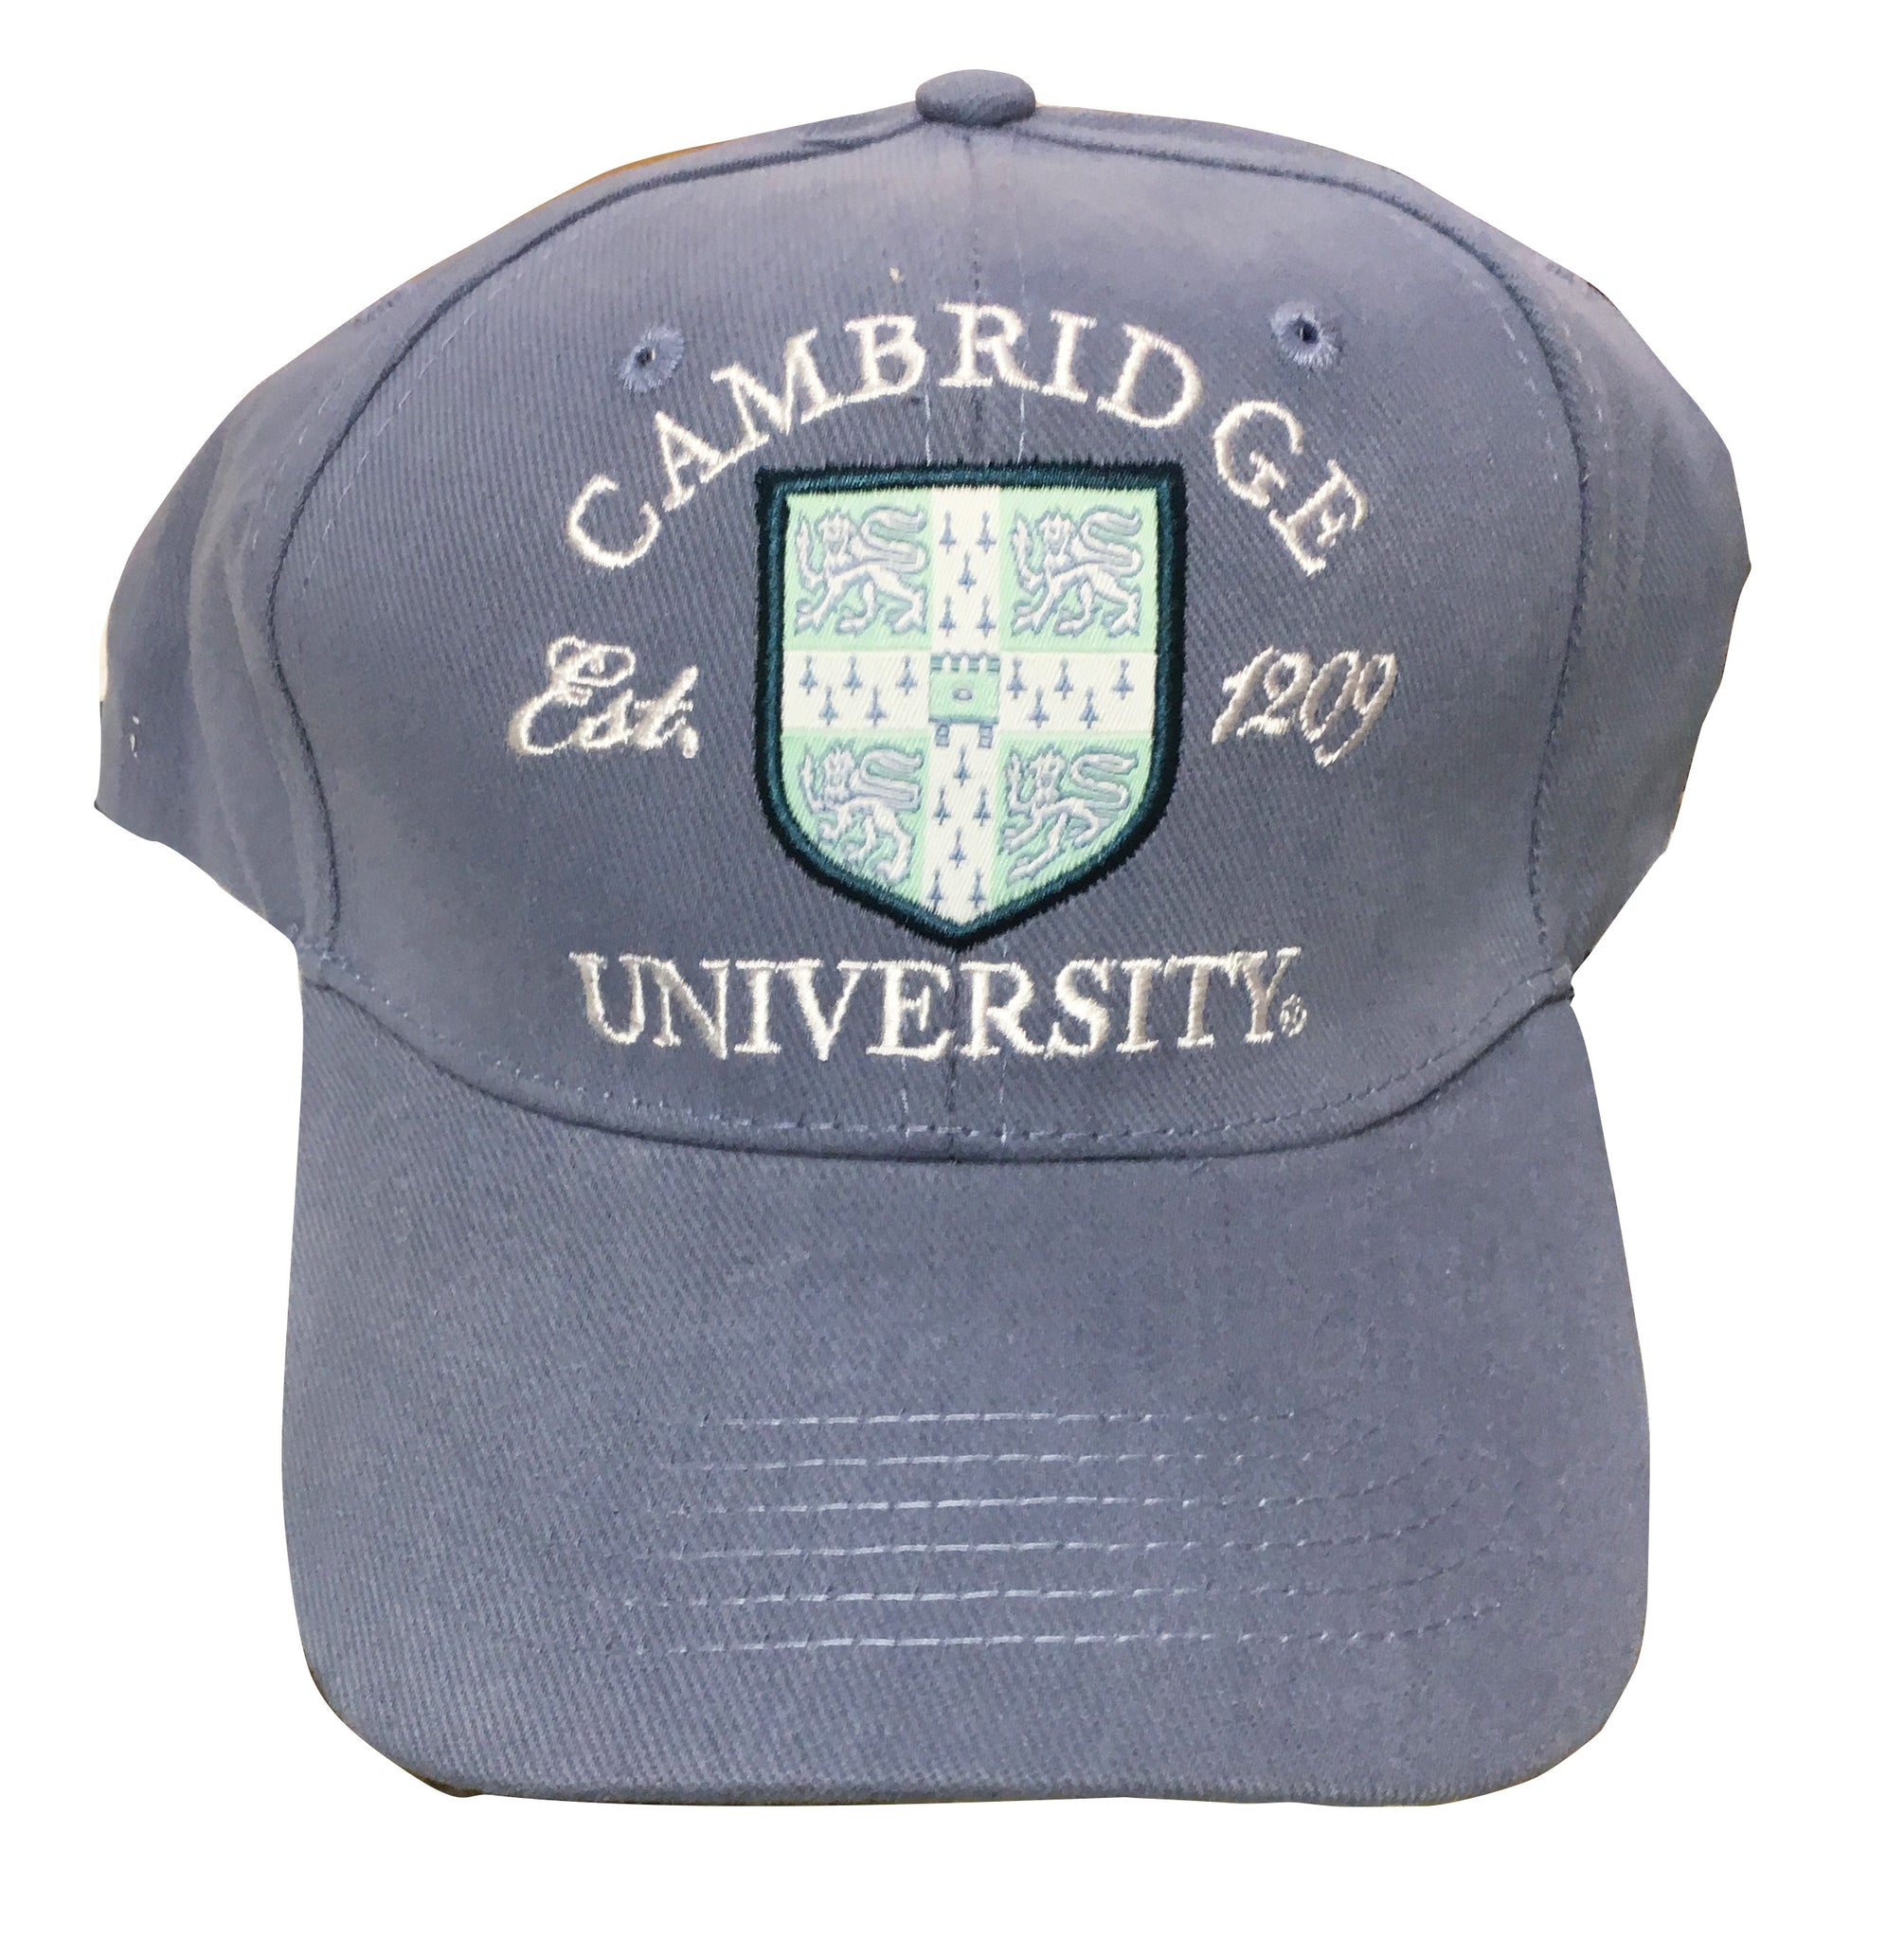 Cambridge University Cap - Grey - Official Apparel